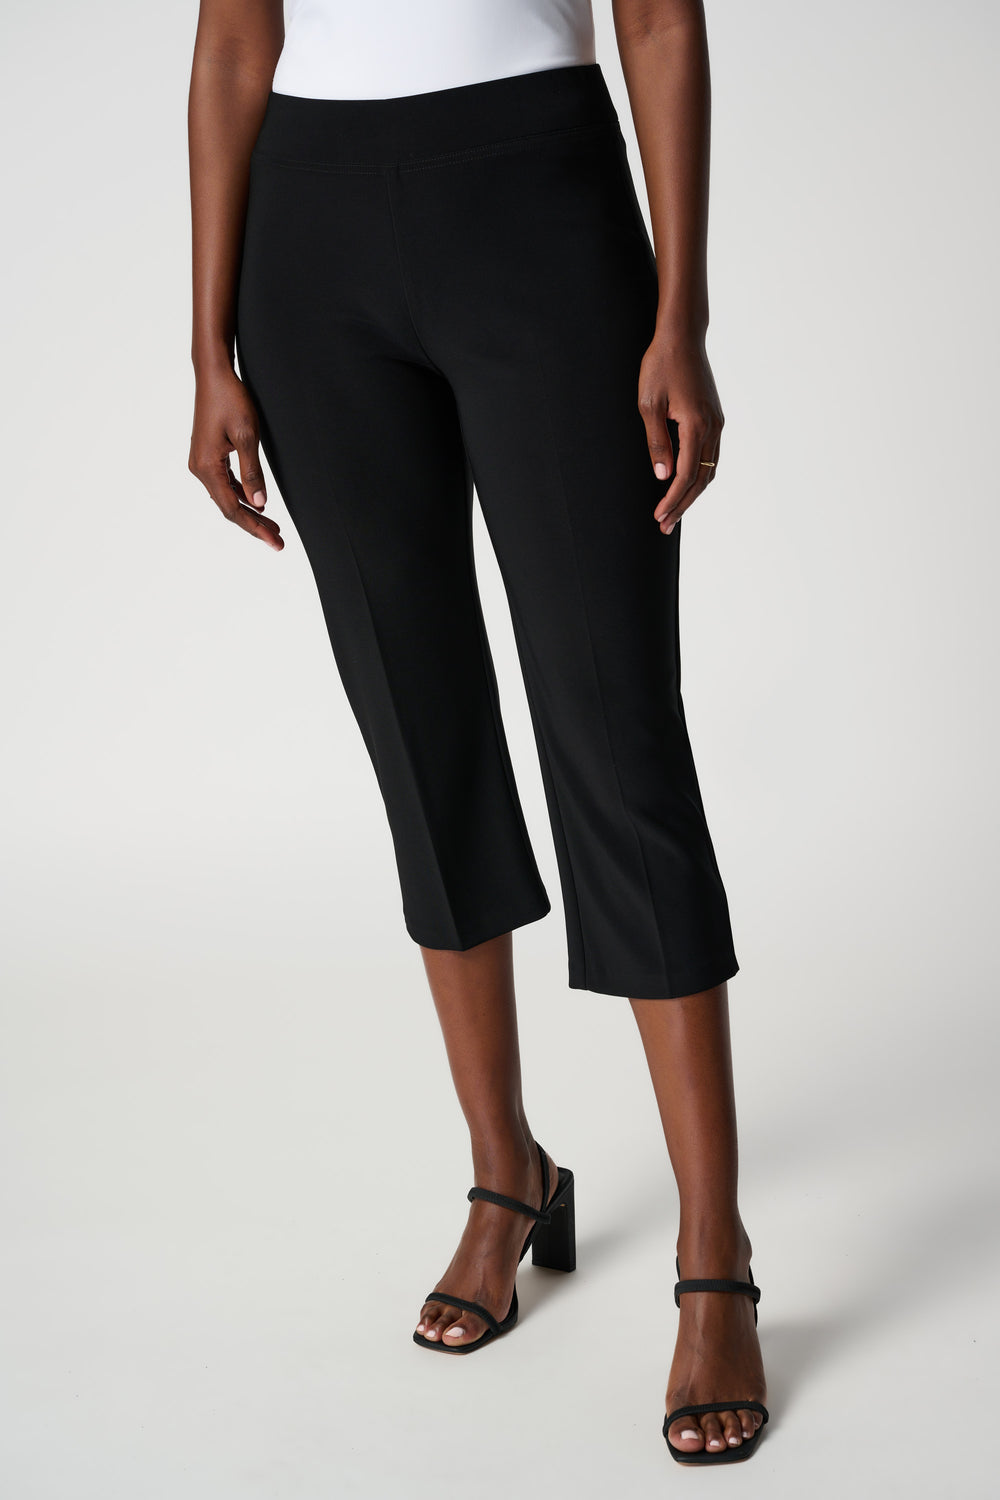 JOSEPH RIBKOFF women's business casual cropped capri dress pants - black front